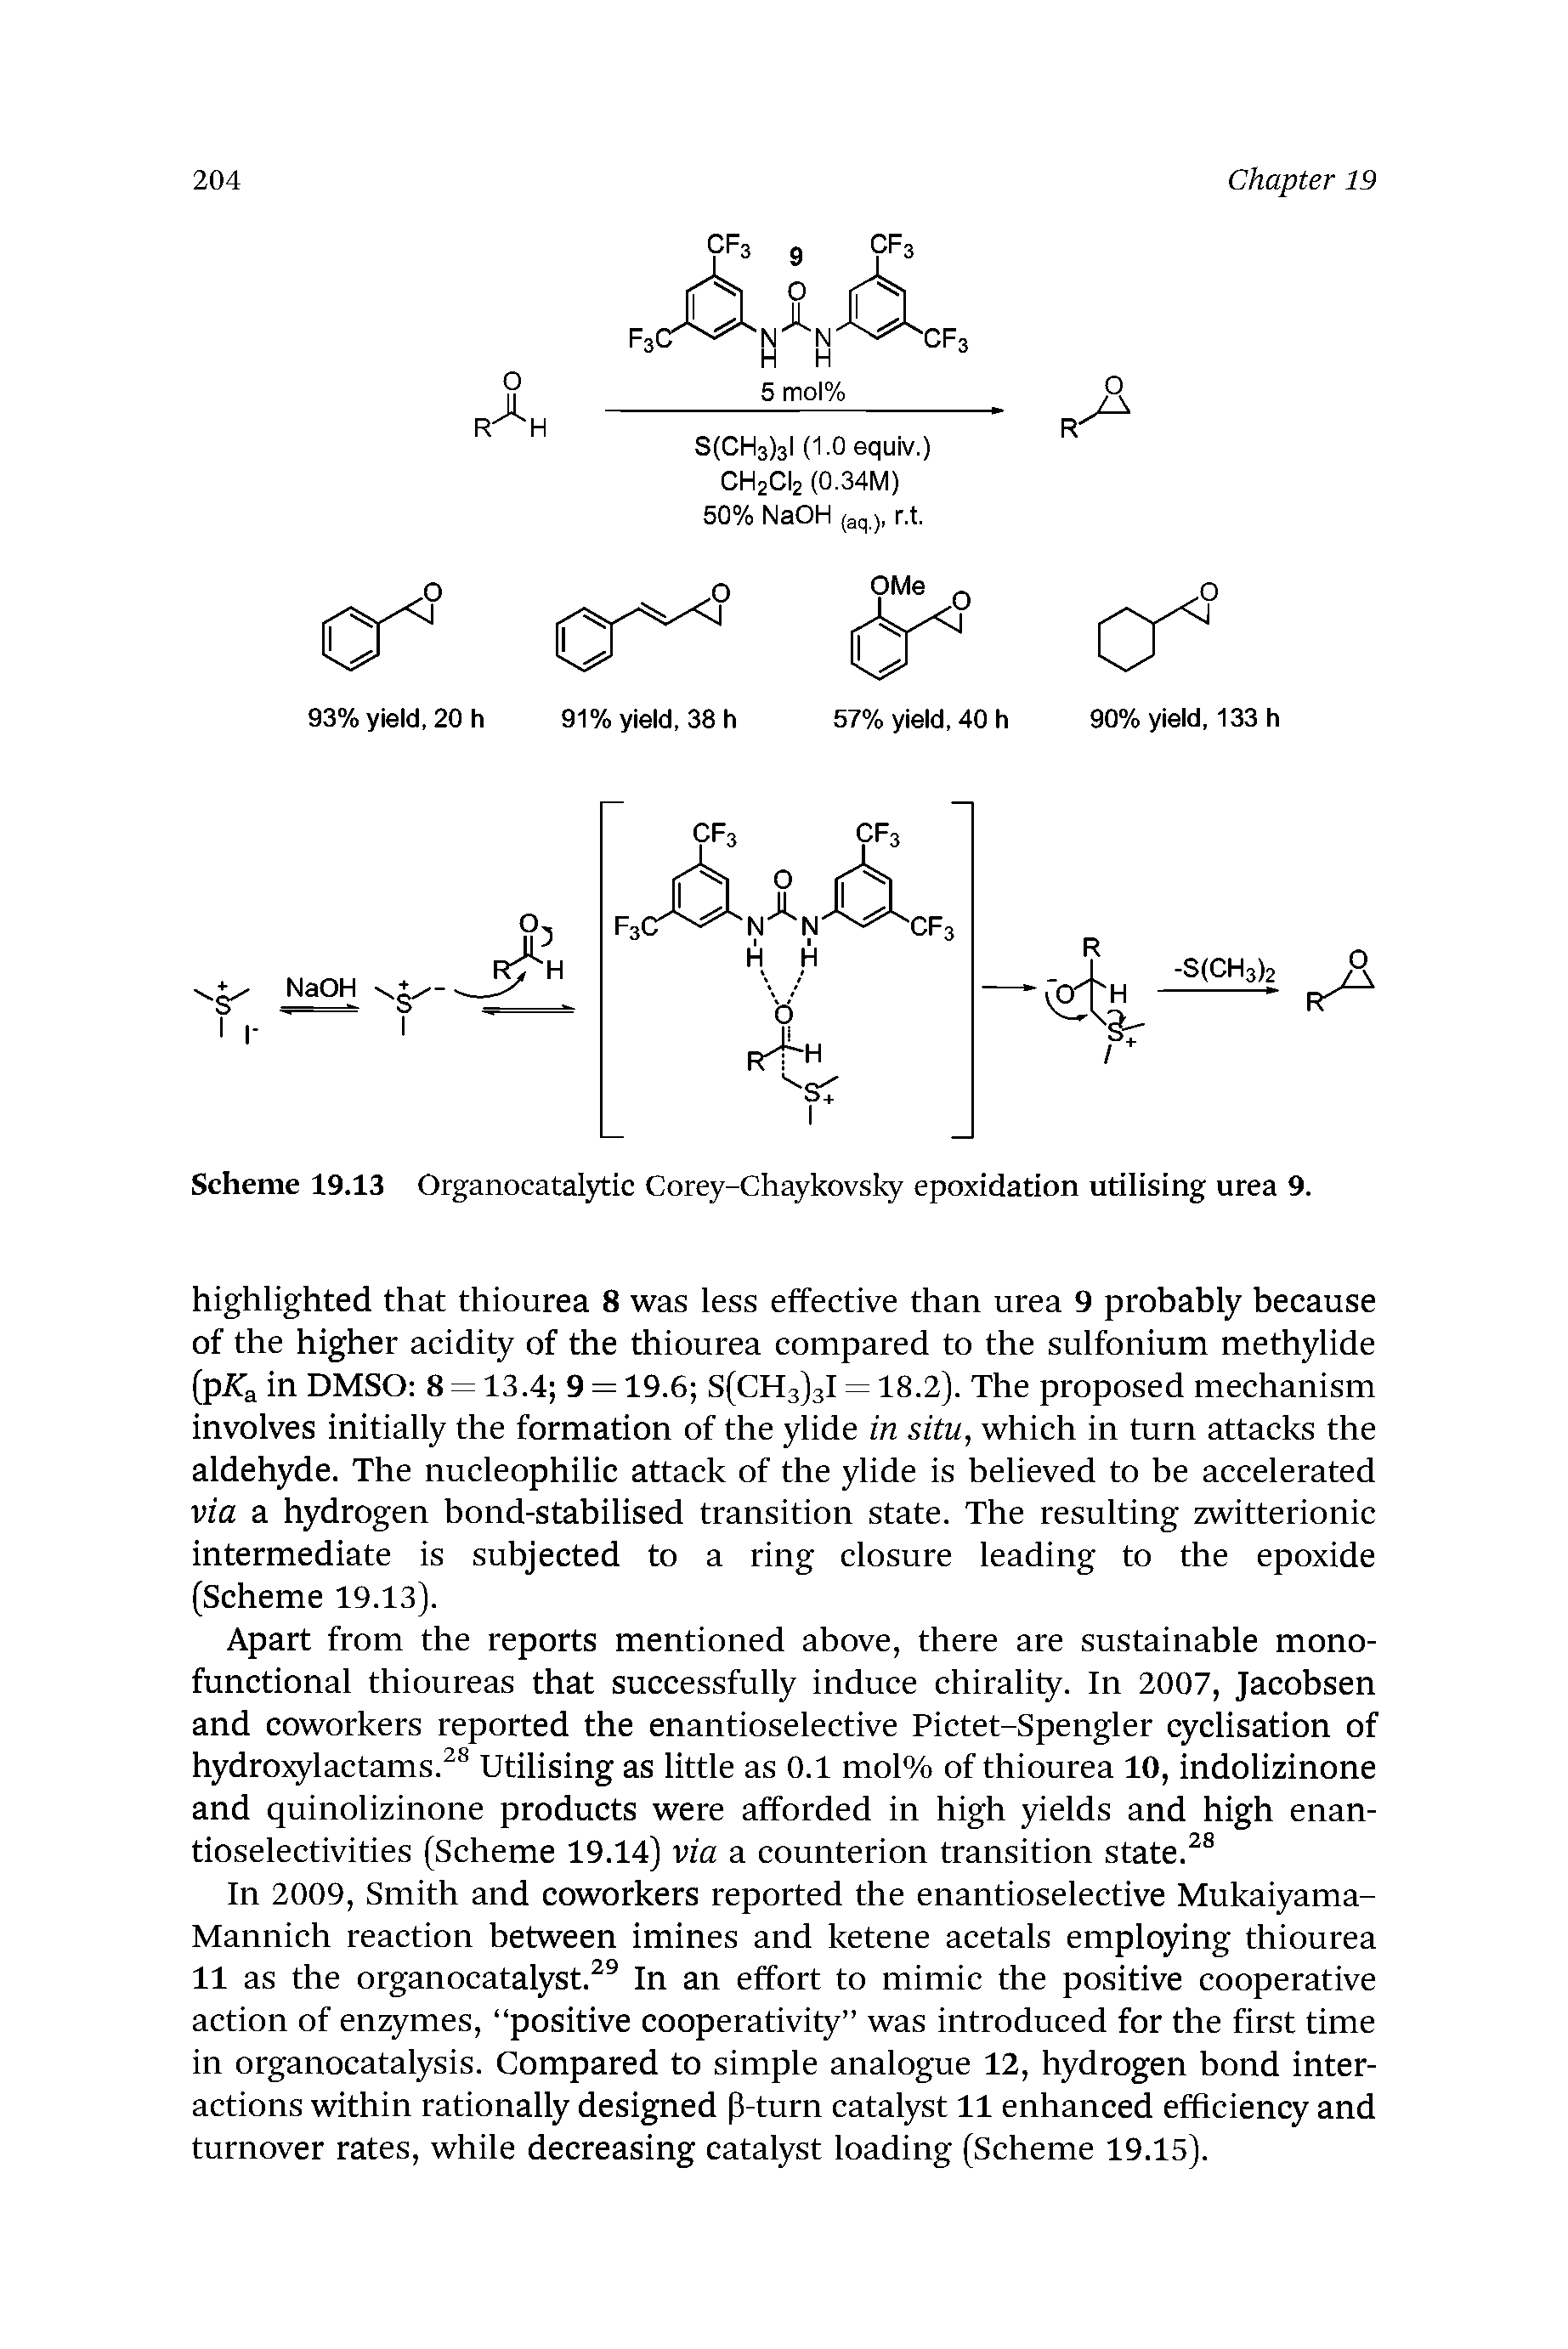 Scheme 19.13 Organocatalytic Corey-Chaykovsky epoxidation utilising urea 9.